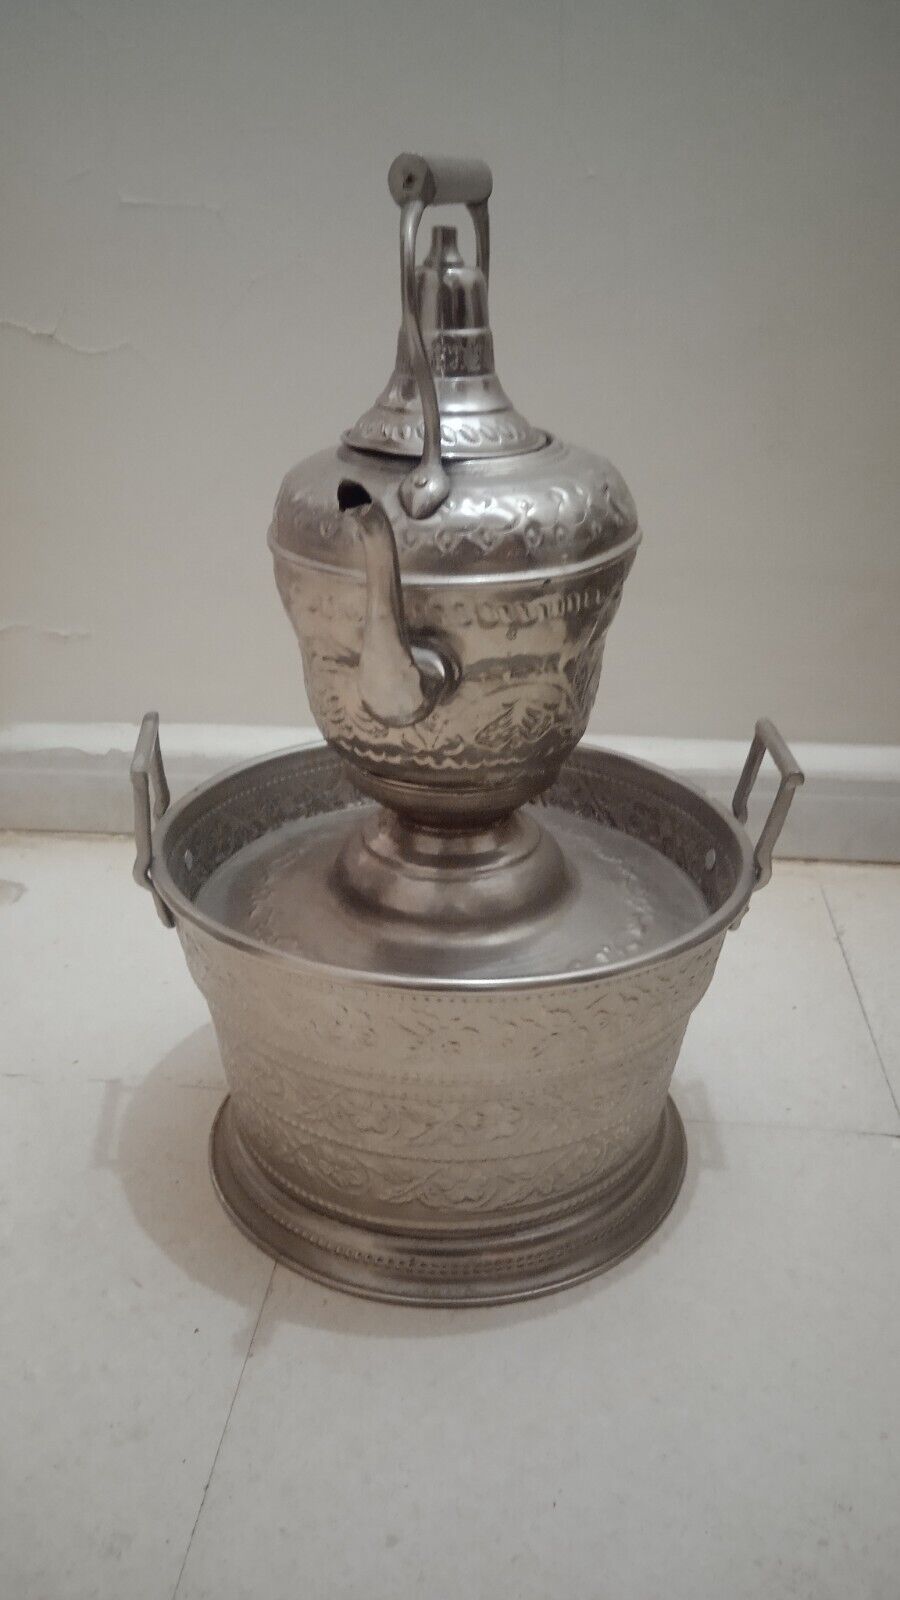 Vintage Moroccan Hand Washing Set - Antique Copper and Brass Hammam Décor